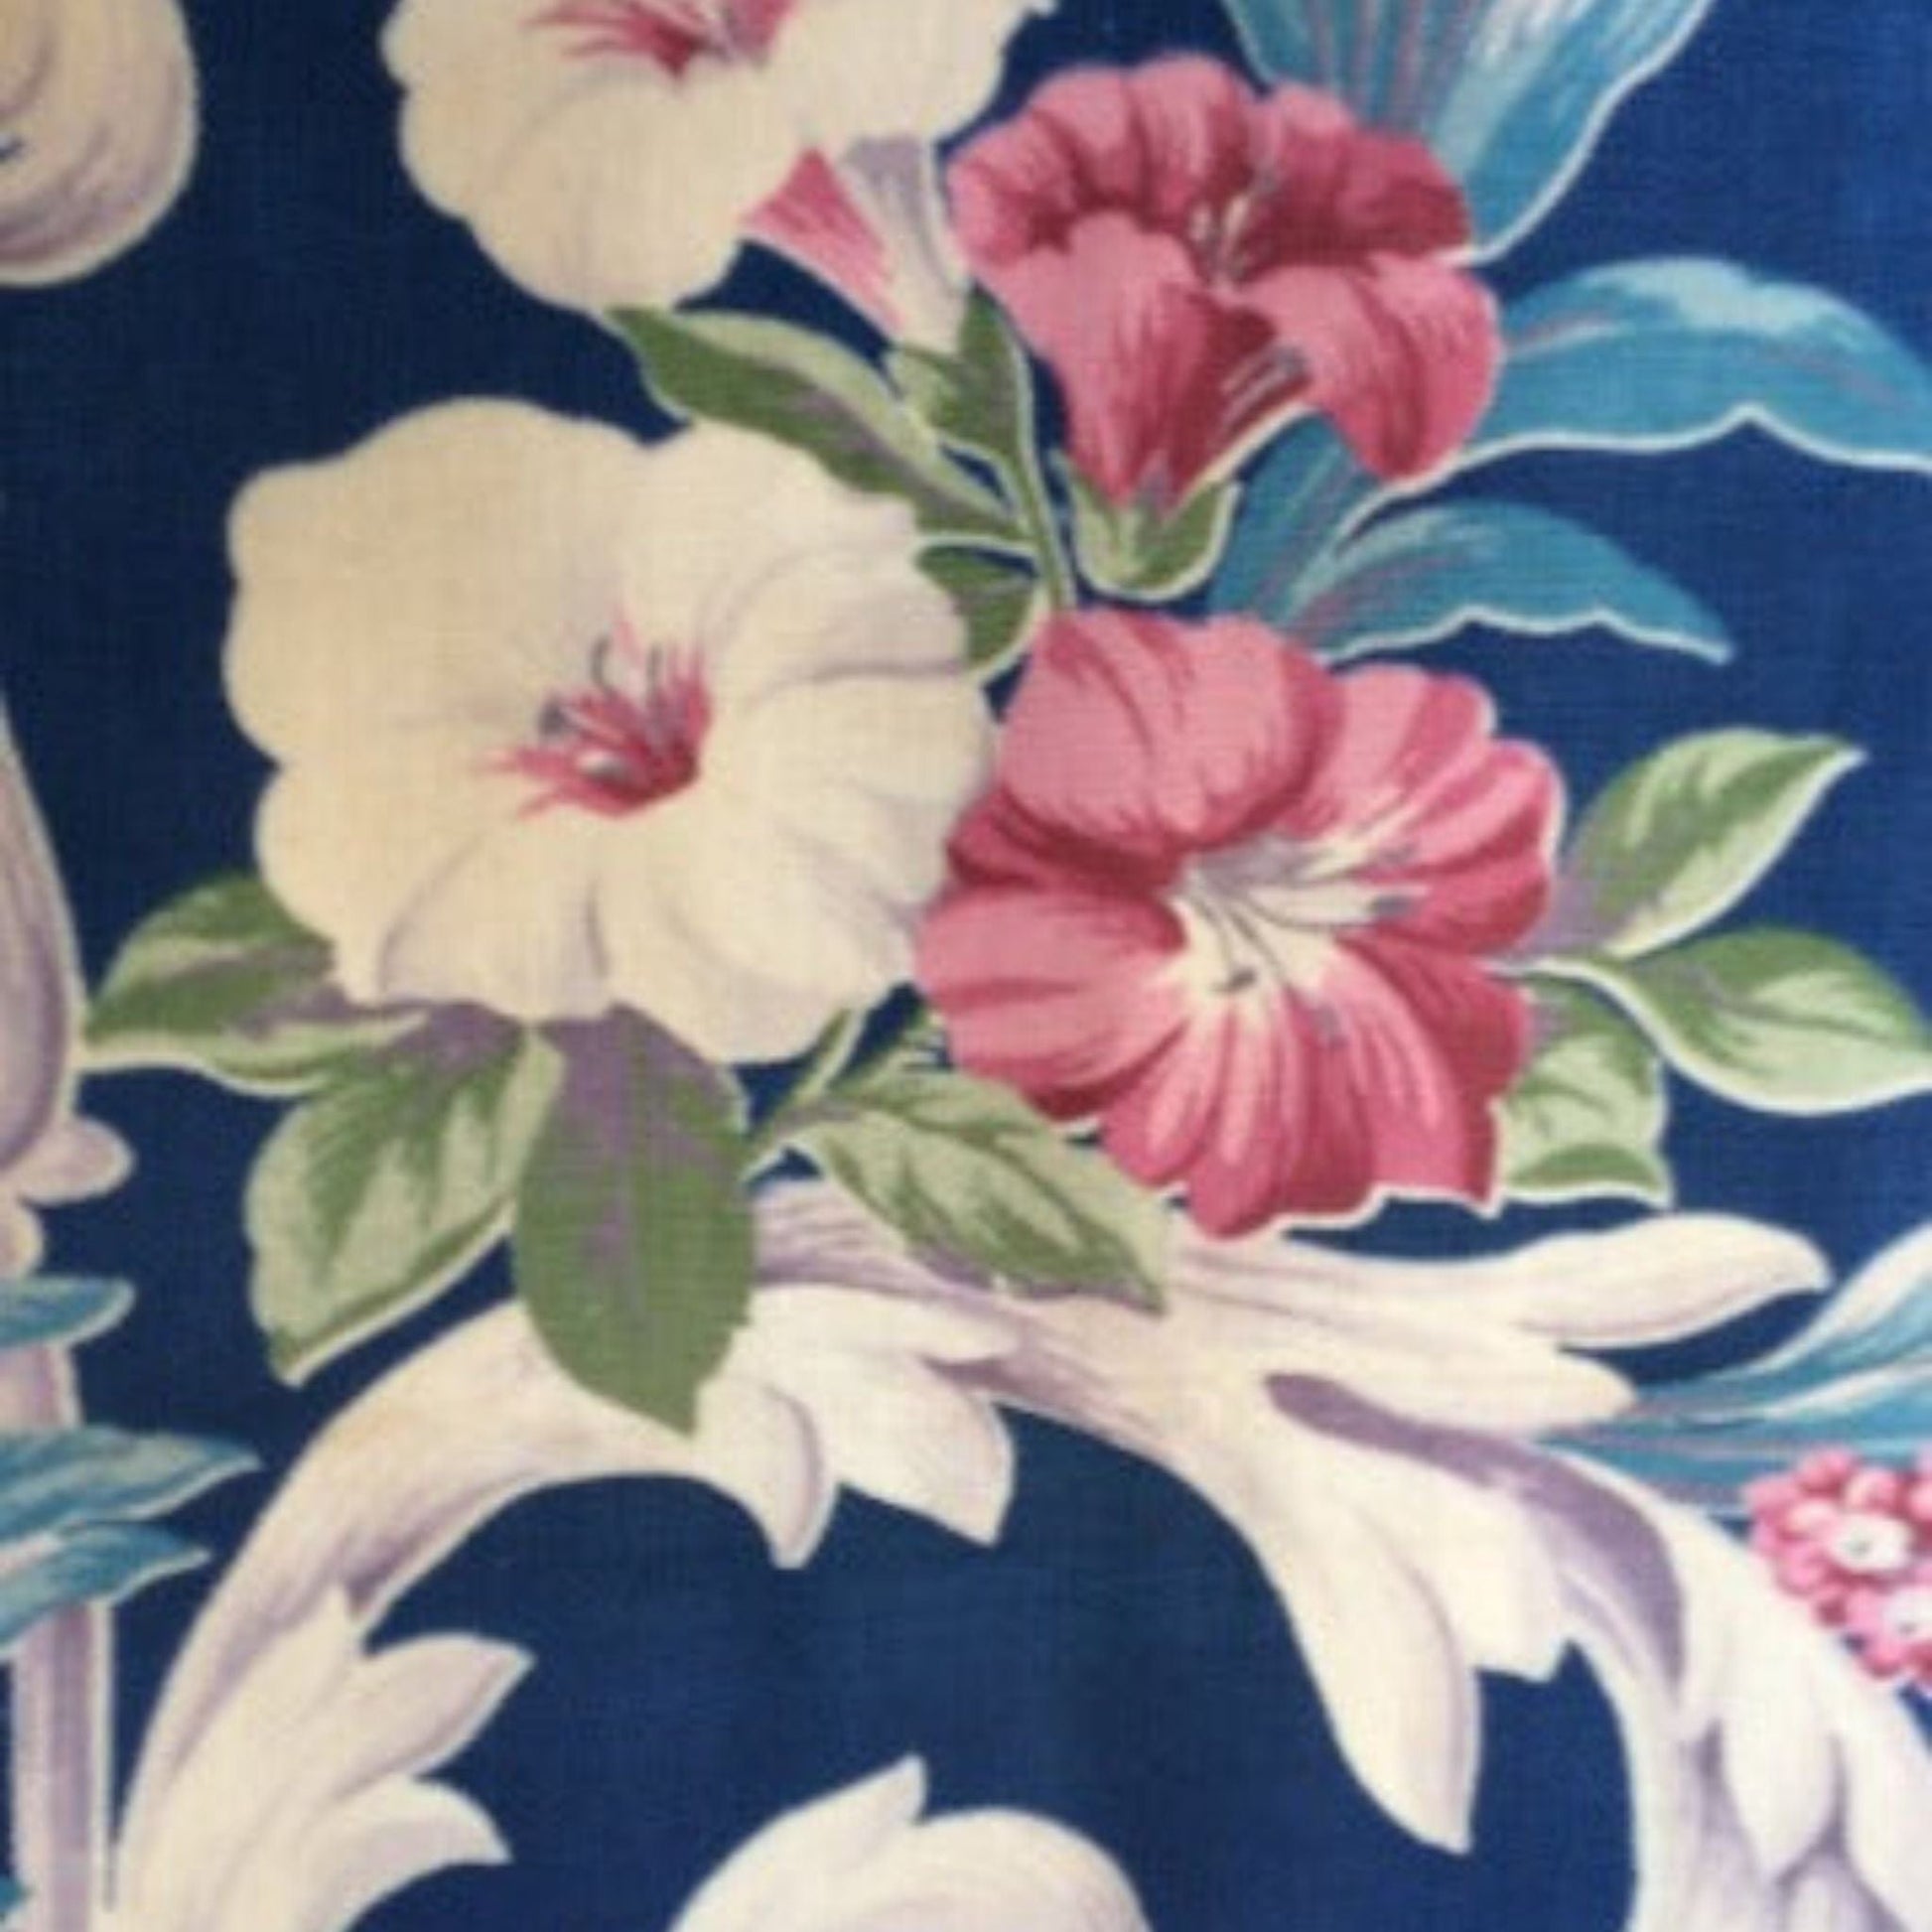 Vintage Floral Barkcloth Multi / Barkcloth / Vintage 1940s